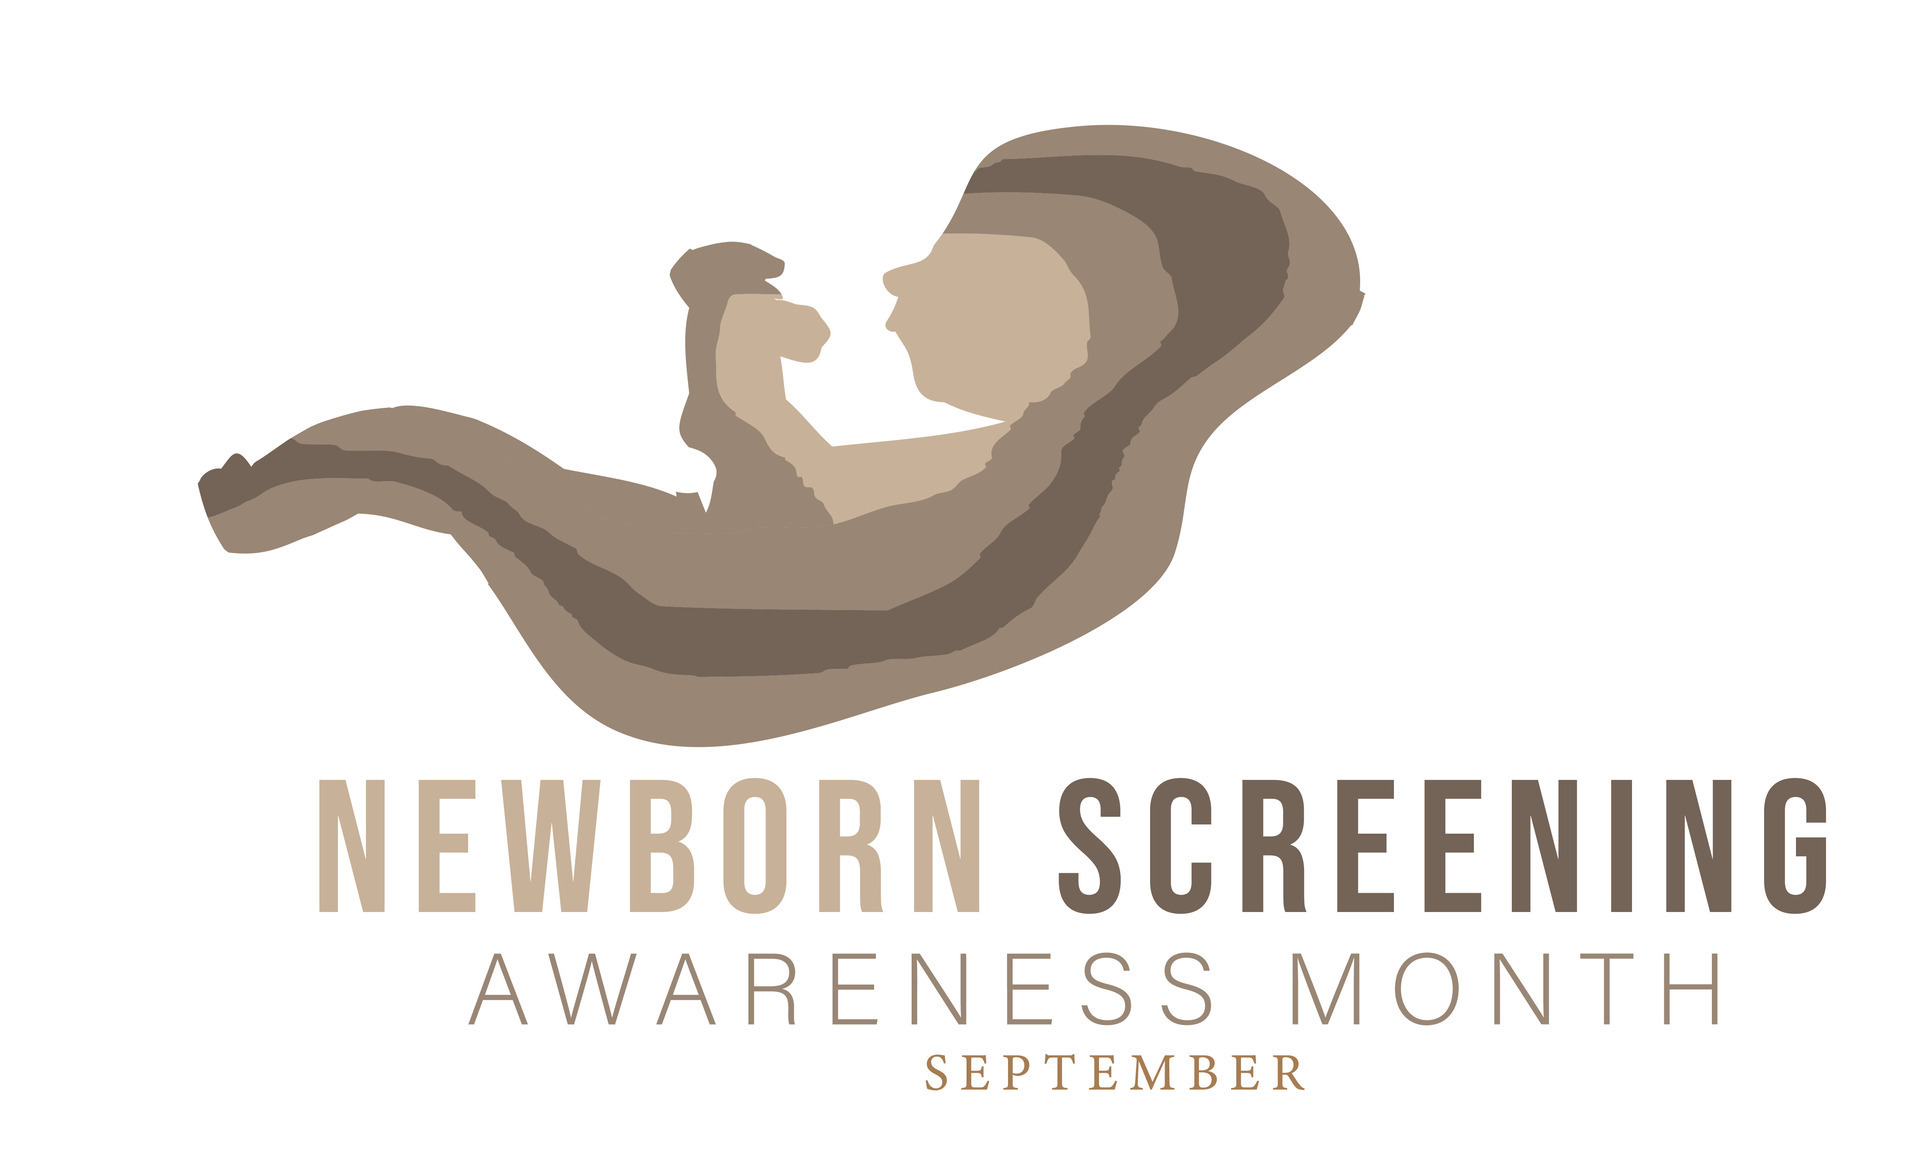 Newborn screening awareness month. background, banner, card, poster